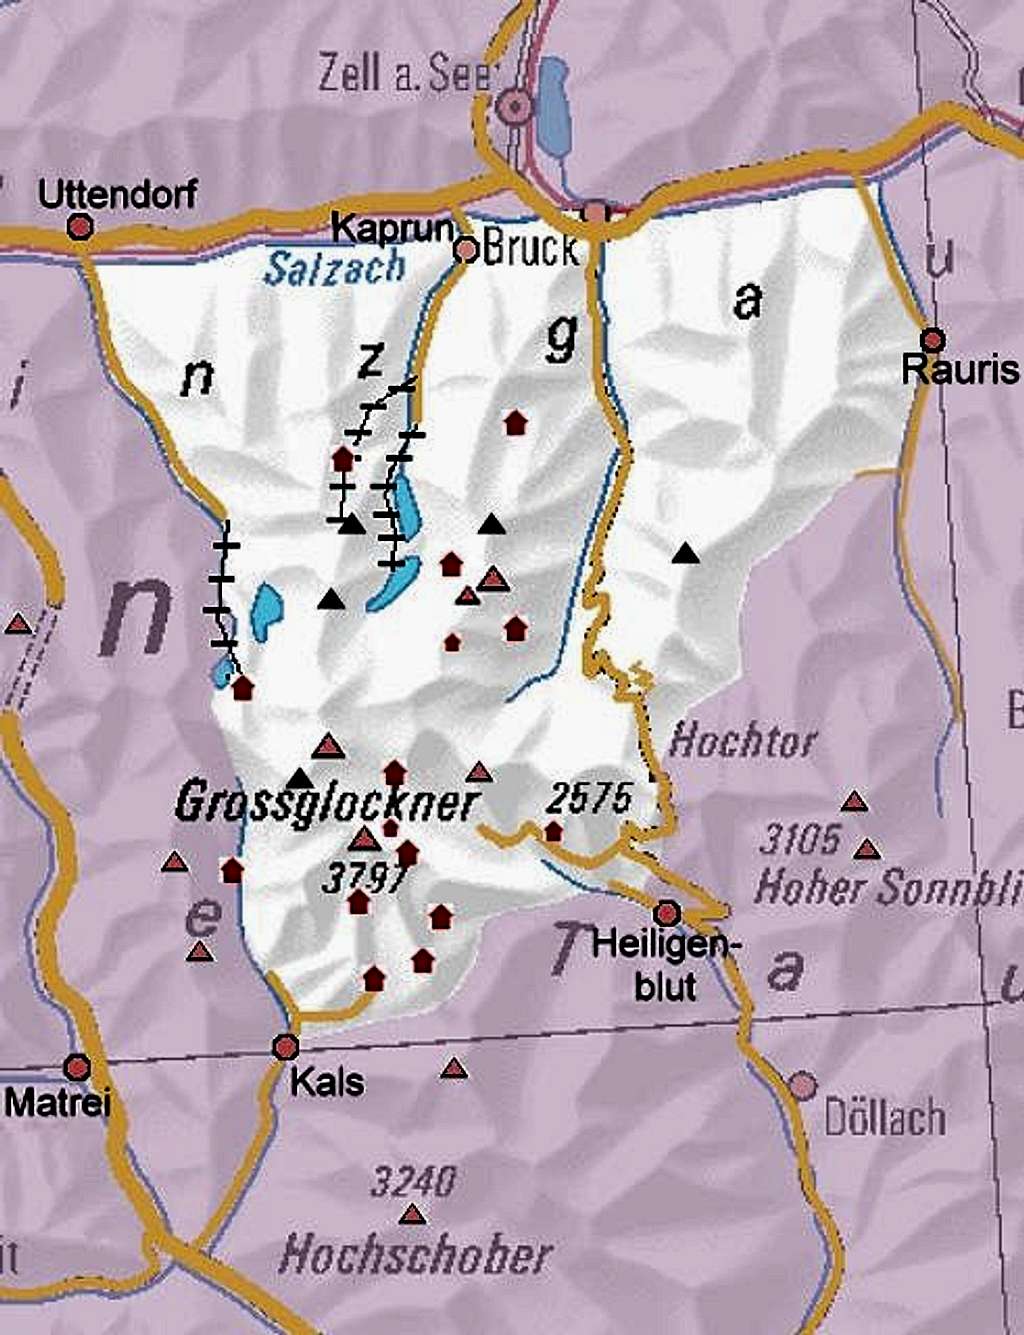 updated map of Glockner Group